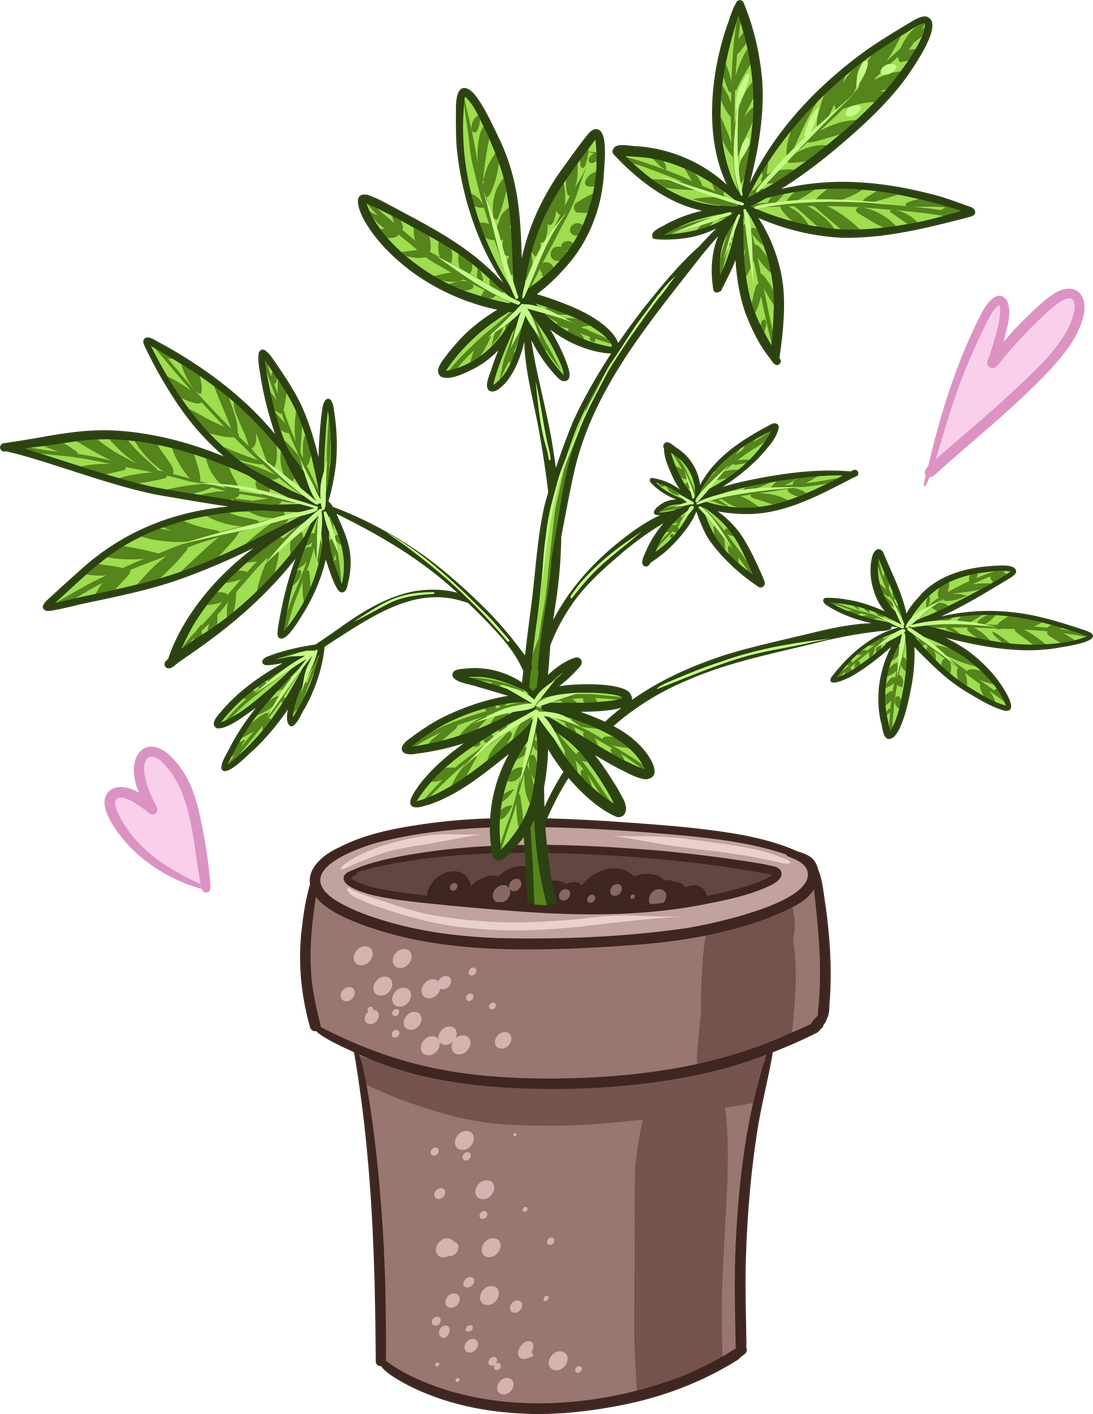 Cannabis cones. Marijuana Branch, Illustration of Medical Weed